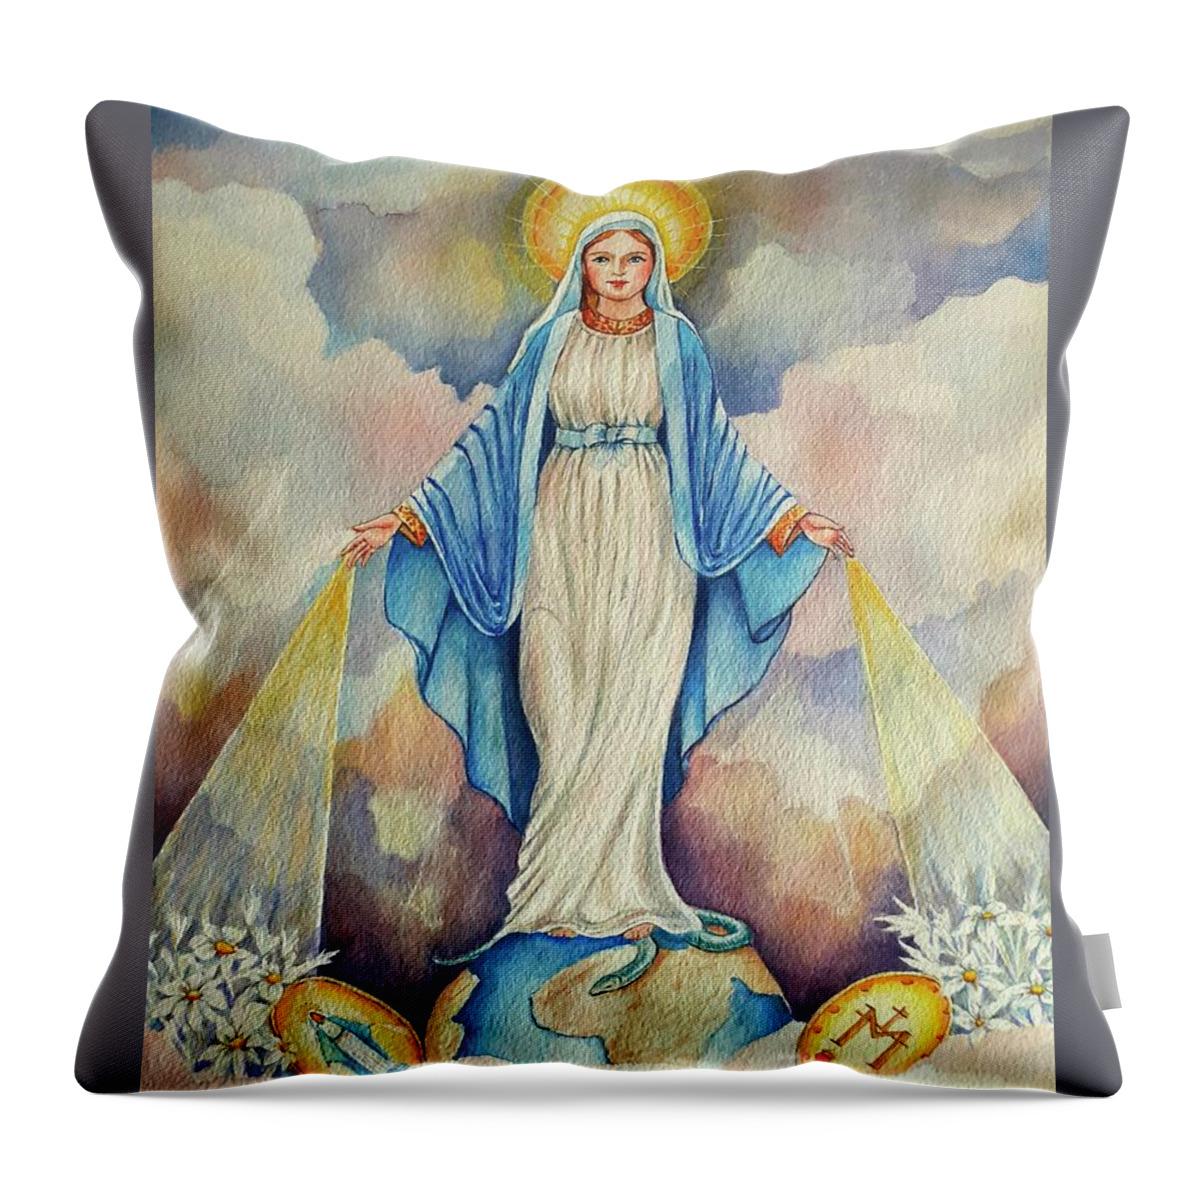 Virgin Throw Pillow featuring the painting Virgin of miracles by Carolina Prieto Moreno